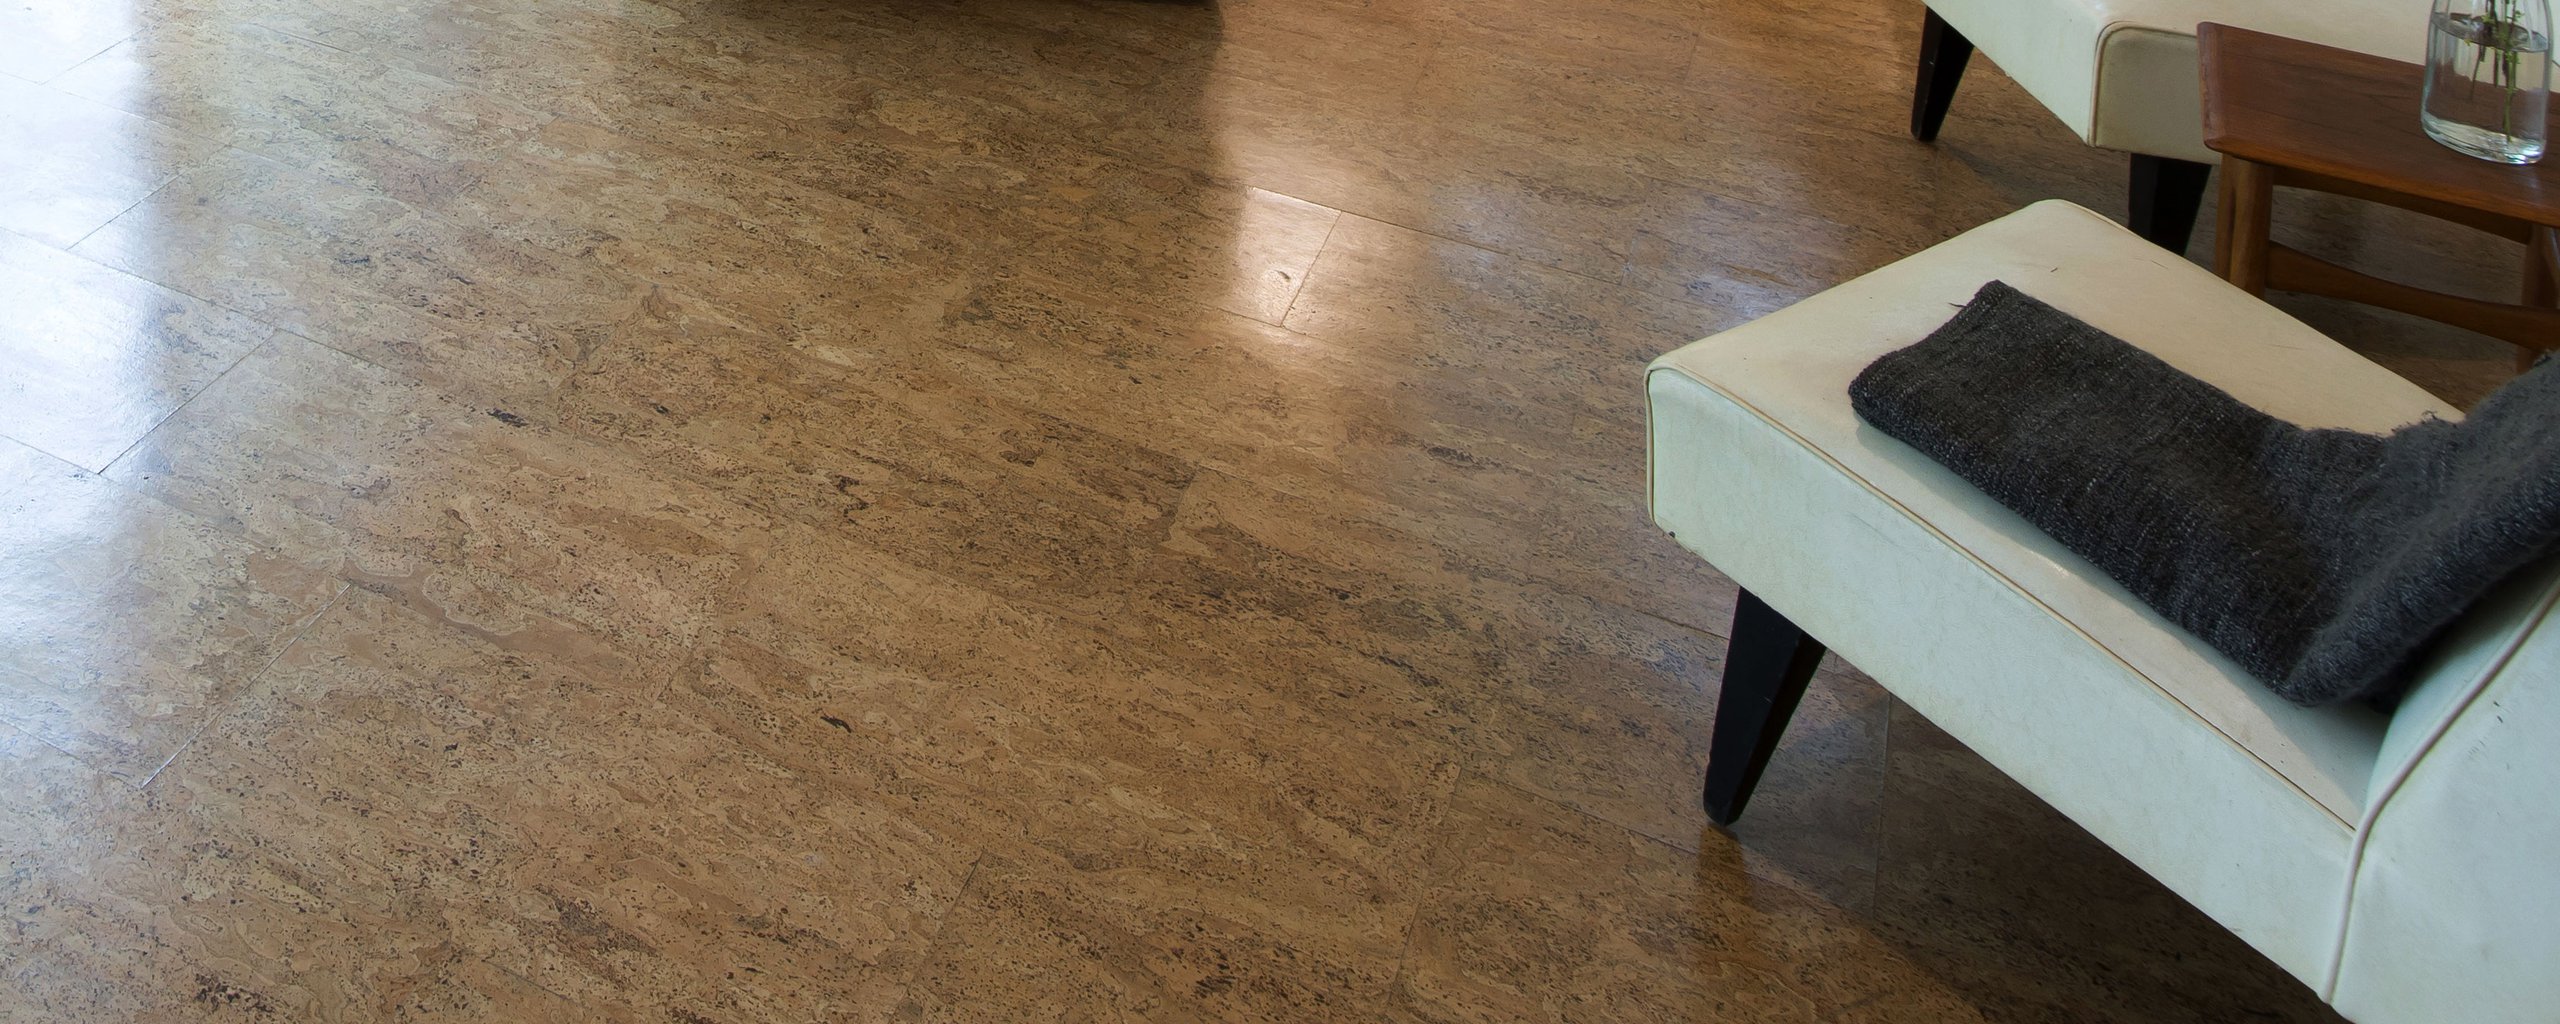 Diy Cork Flooring Pros Cons Green, Installing Cork Flooring On Concrete